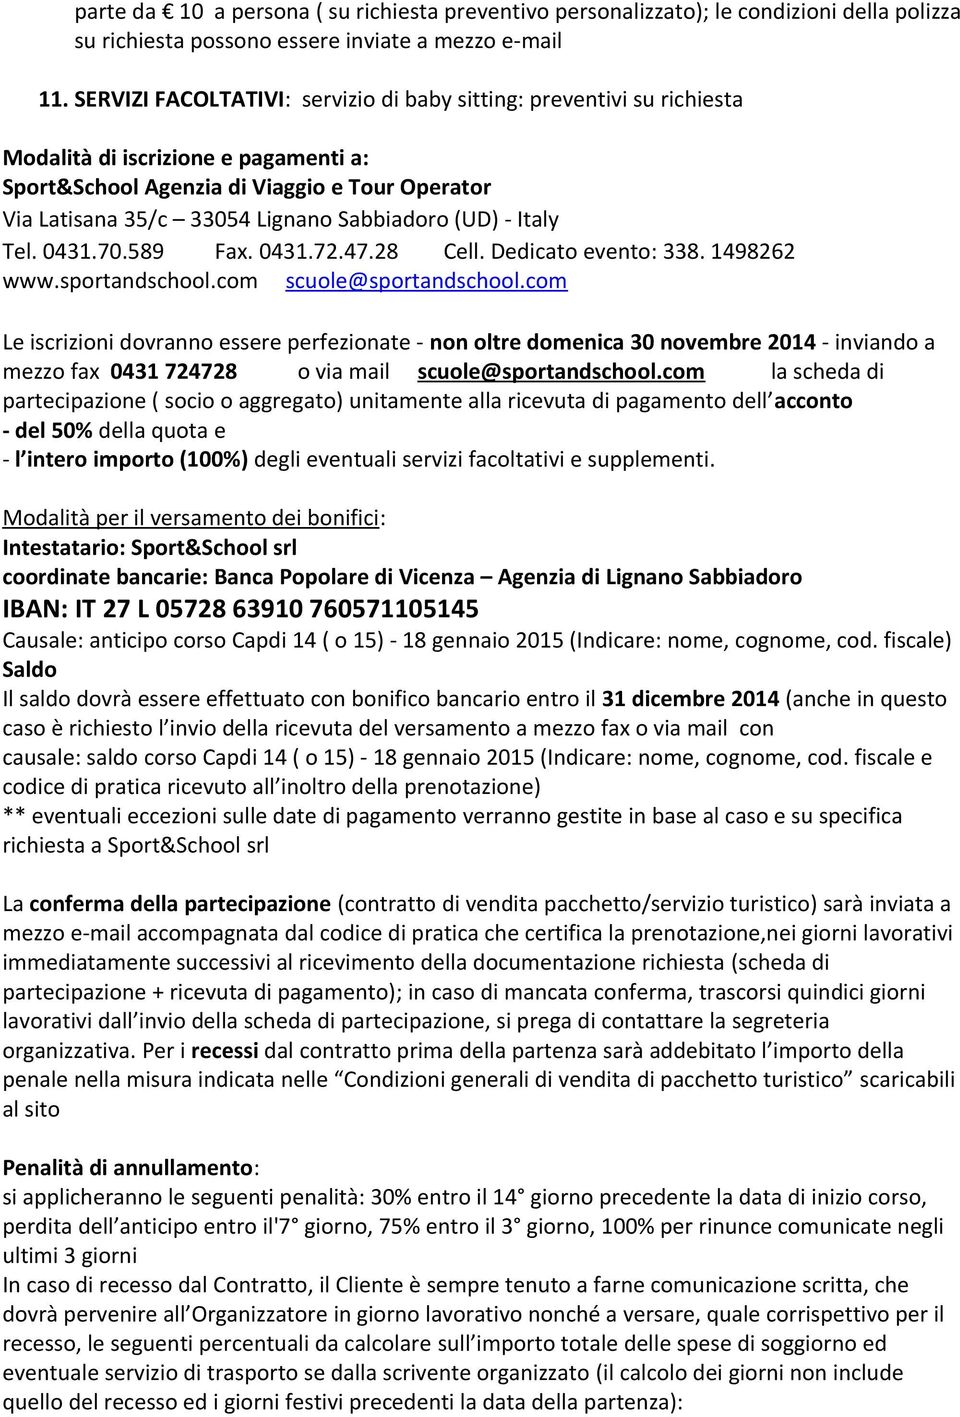 (UD) - Italy Tel. 0431.70.589 Fax. 0431.72.47.28 Cell. Dedicato evento: 338. 1498262 www.sportandschool.com scuole@sportandschool.